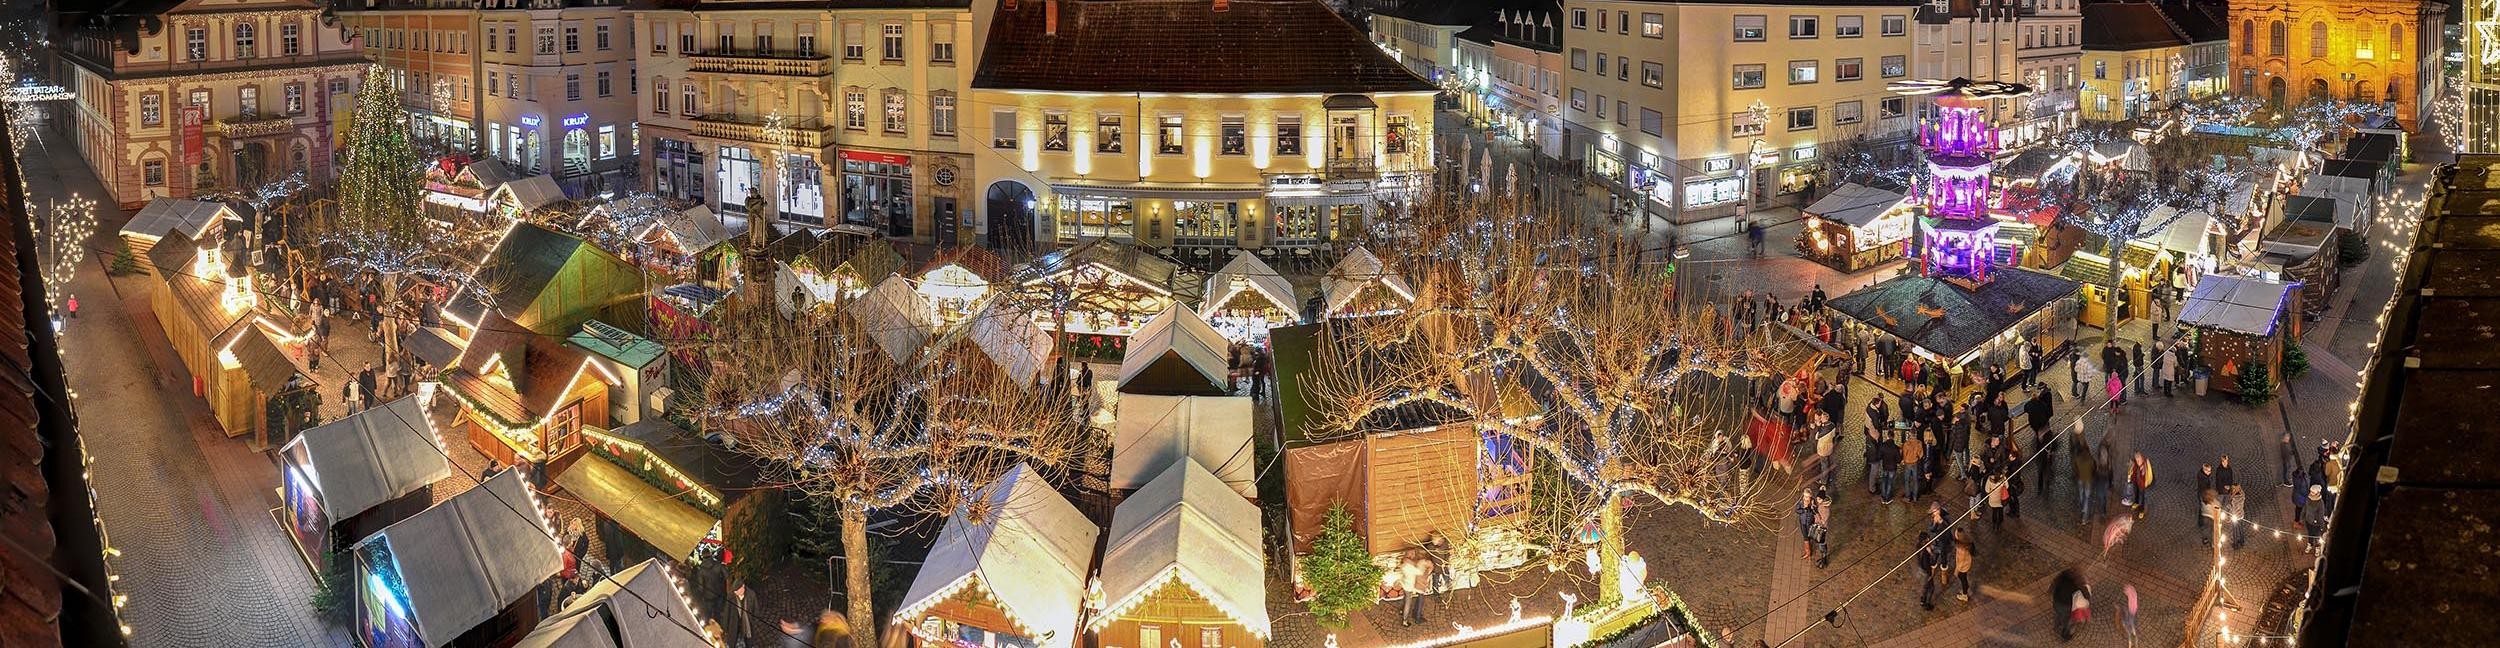 Vue aérienne du marché de Noël de Rastatt